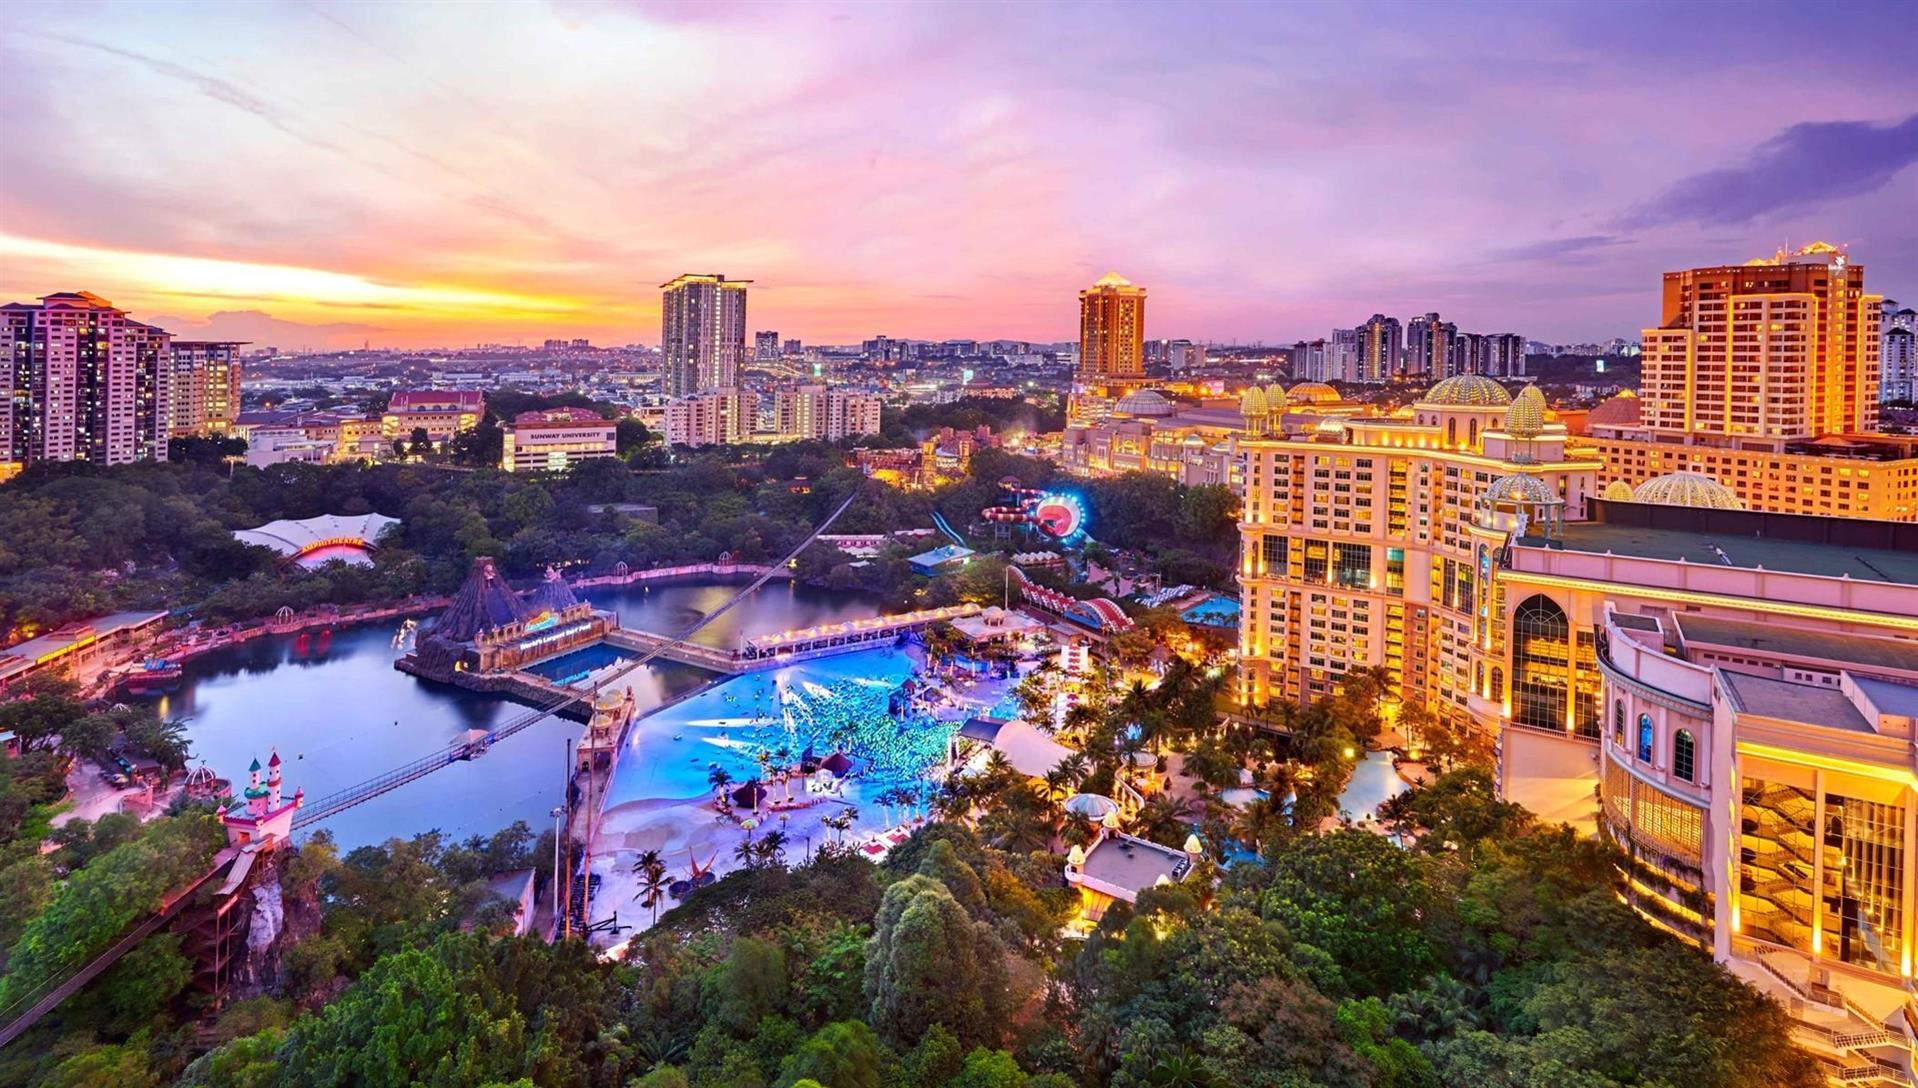 Sunway Resort Hotel in Kuala Lumpur, MY